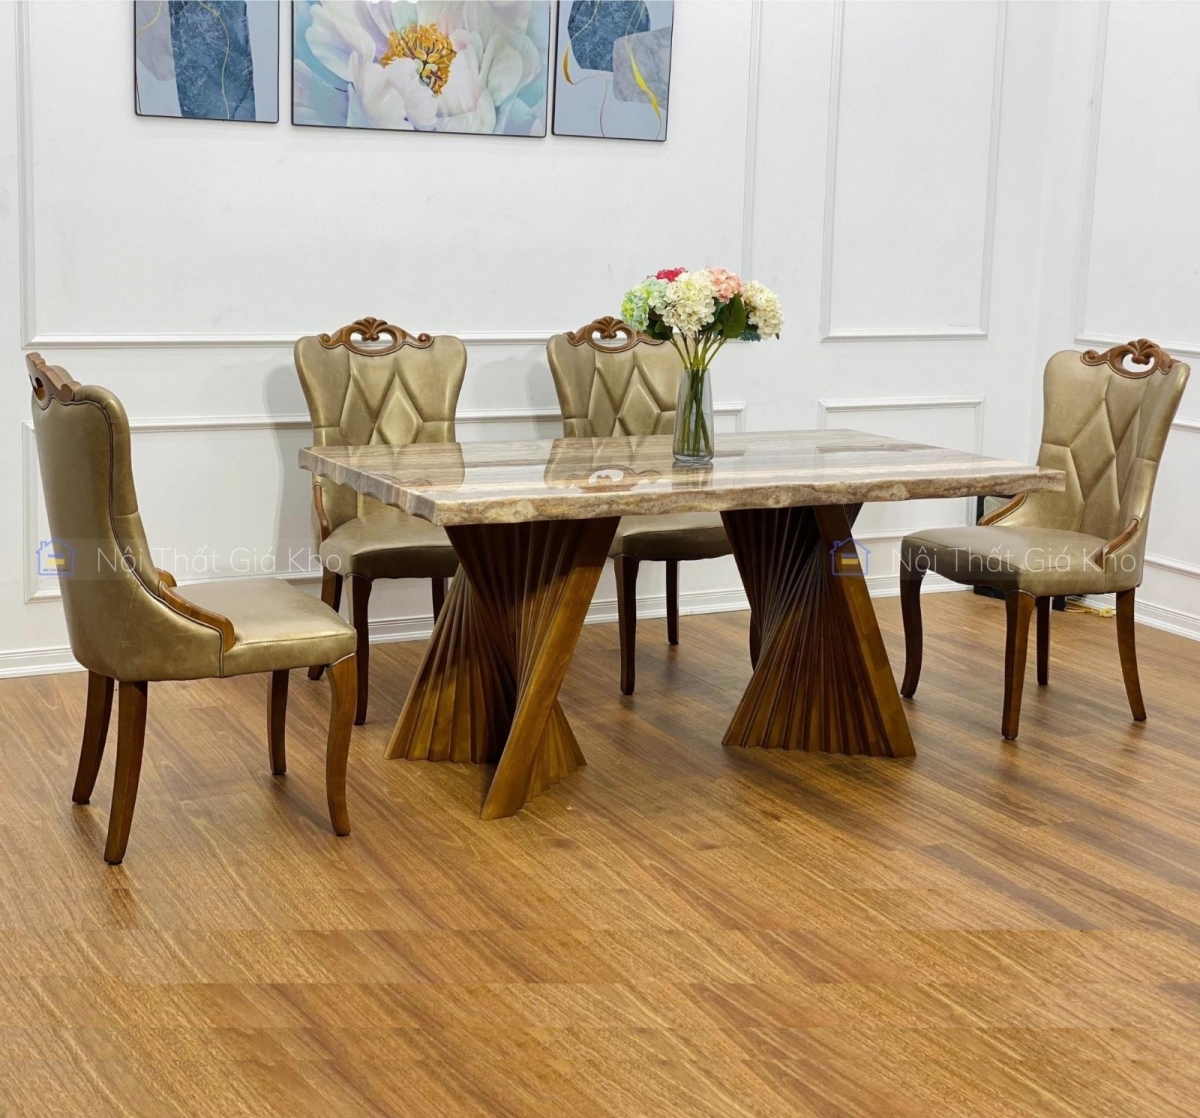 Bộ bàn ghế ăn tân cổ điển cao cấp chân gỗ sồi